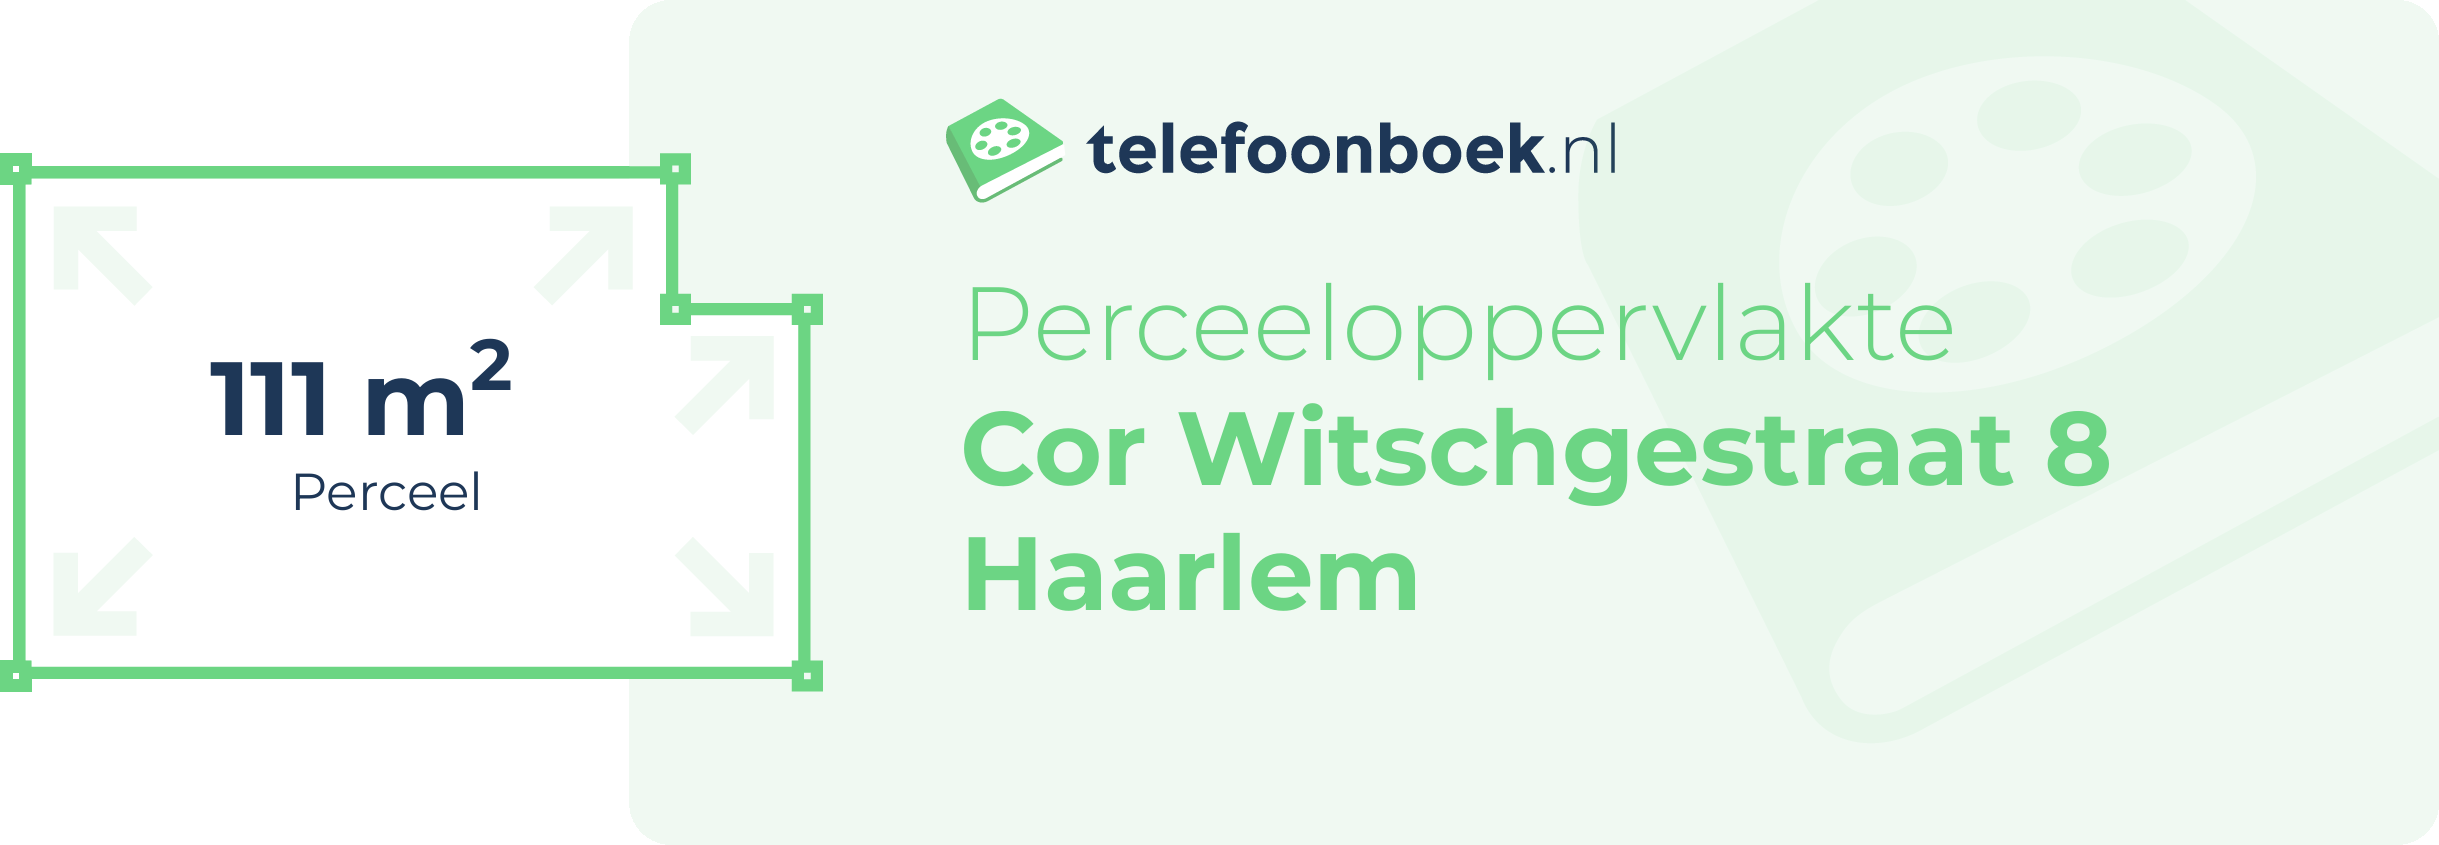 Perceeloppervlakte Cor Witschgestraat 8 Haarlem